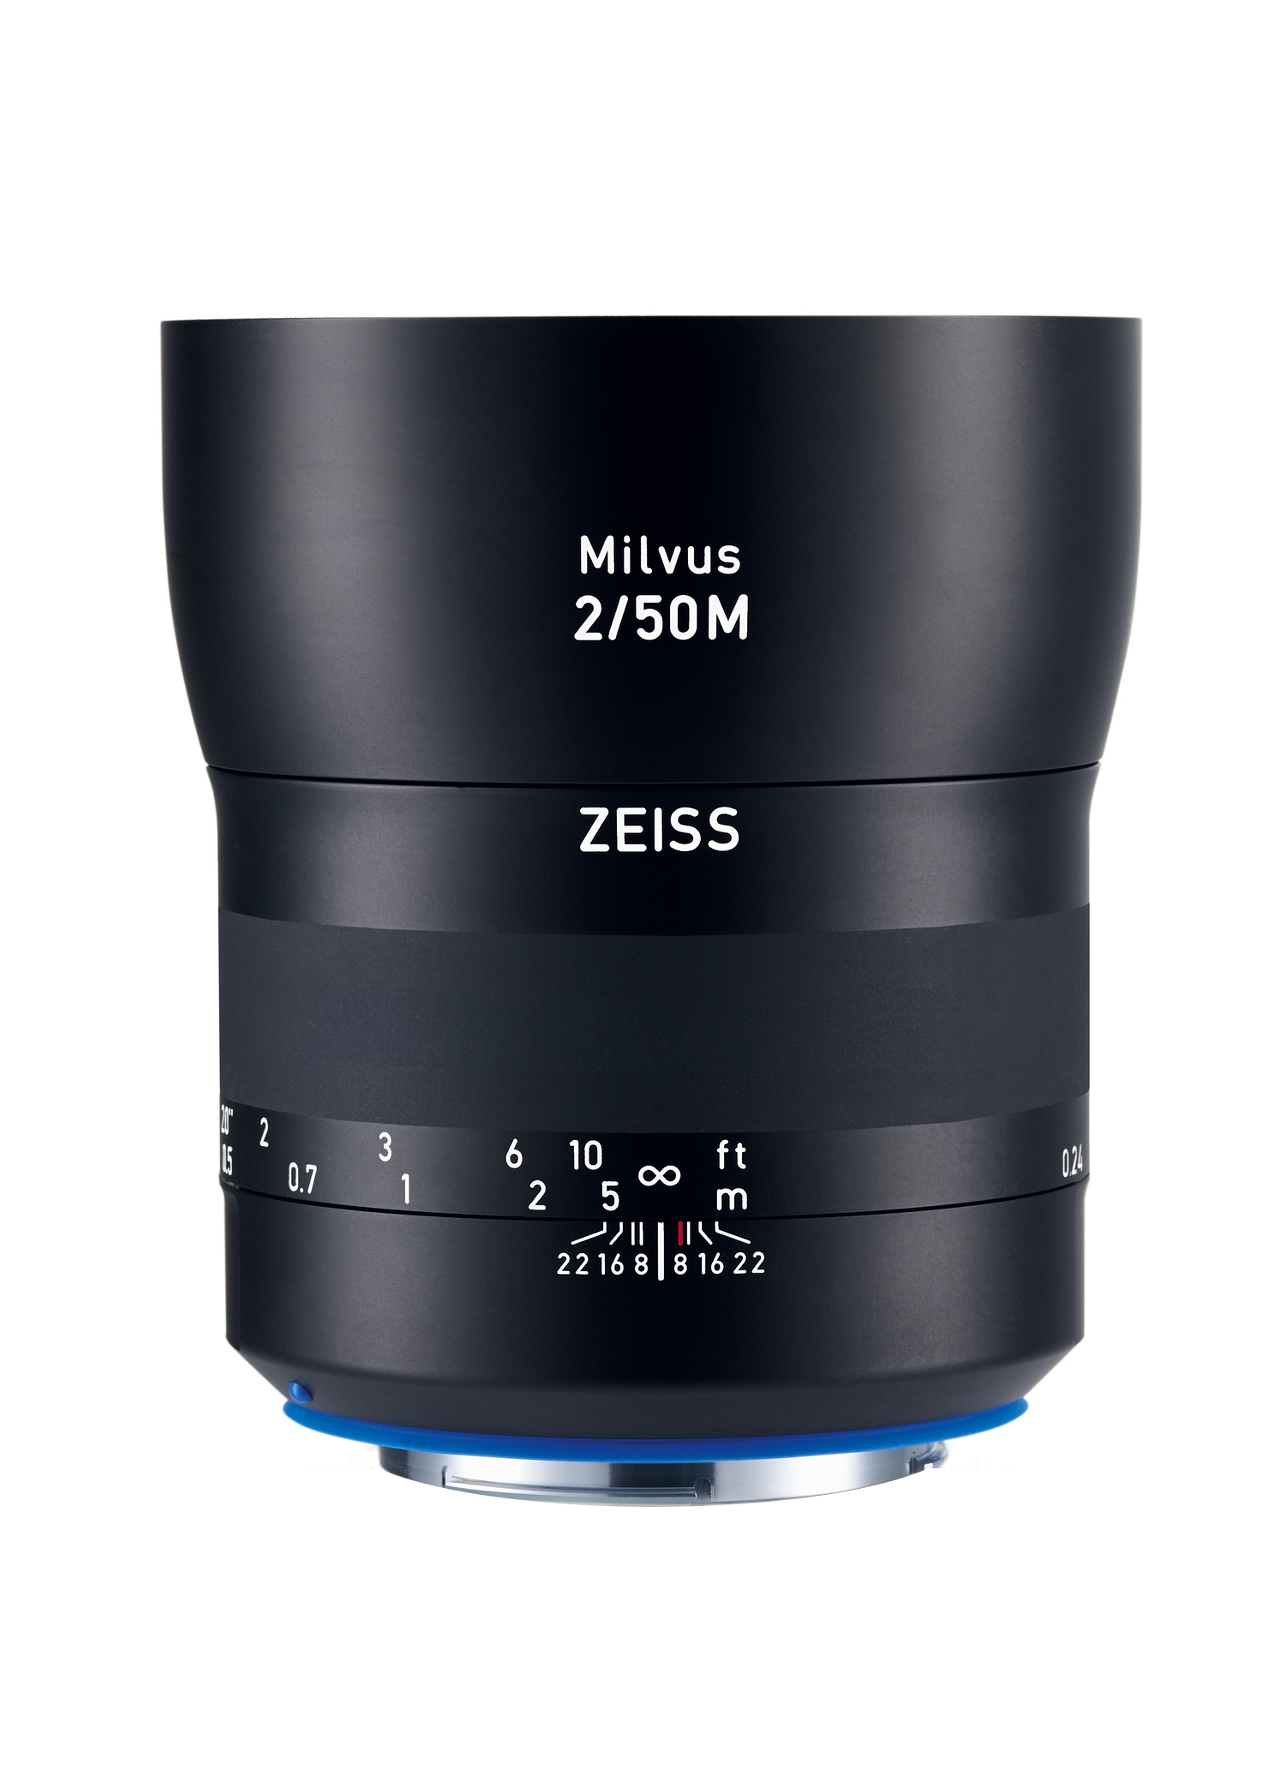 ZEISS Milvus 2/50M | Manual focus lens for Canon & Nikon SLR cameras